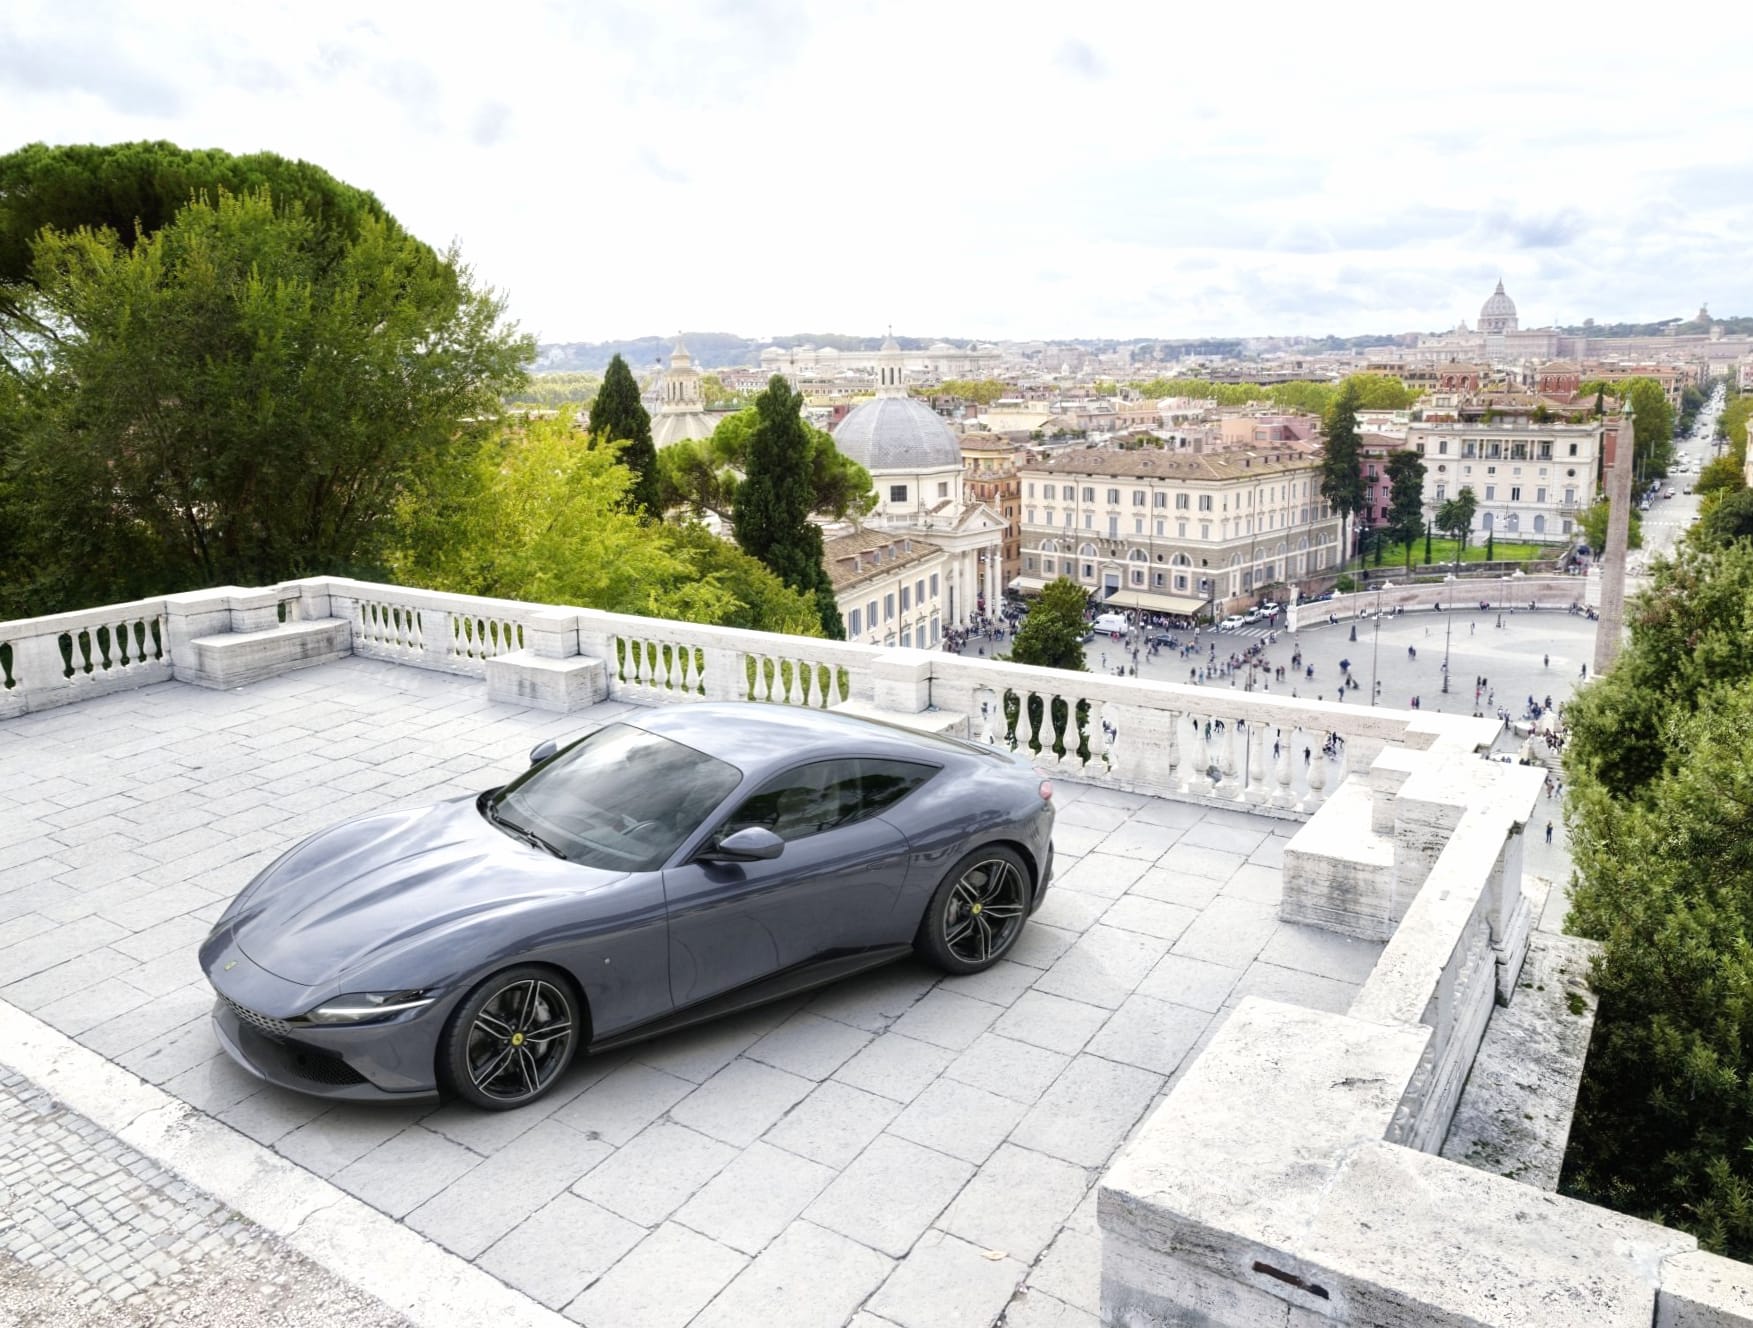 Ferrari Roma at 1600 x 1200 size wallpapers HD quality